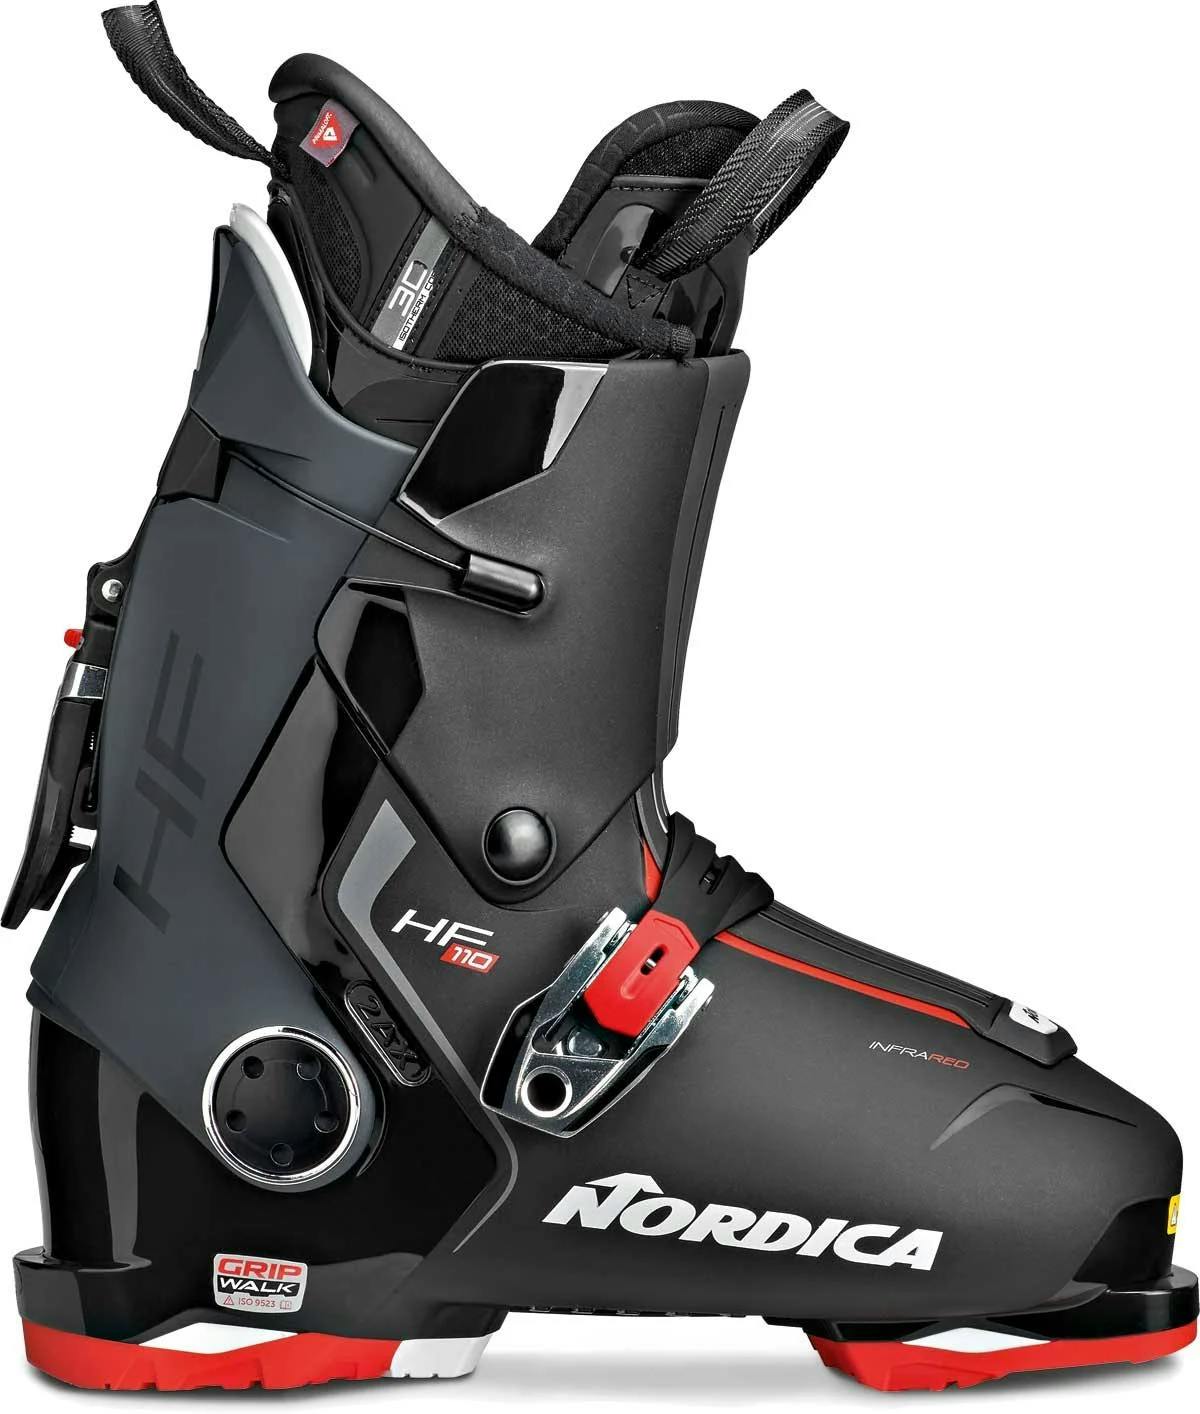 Nordica Hf 110 Ski Boots · 2021